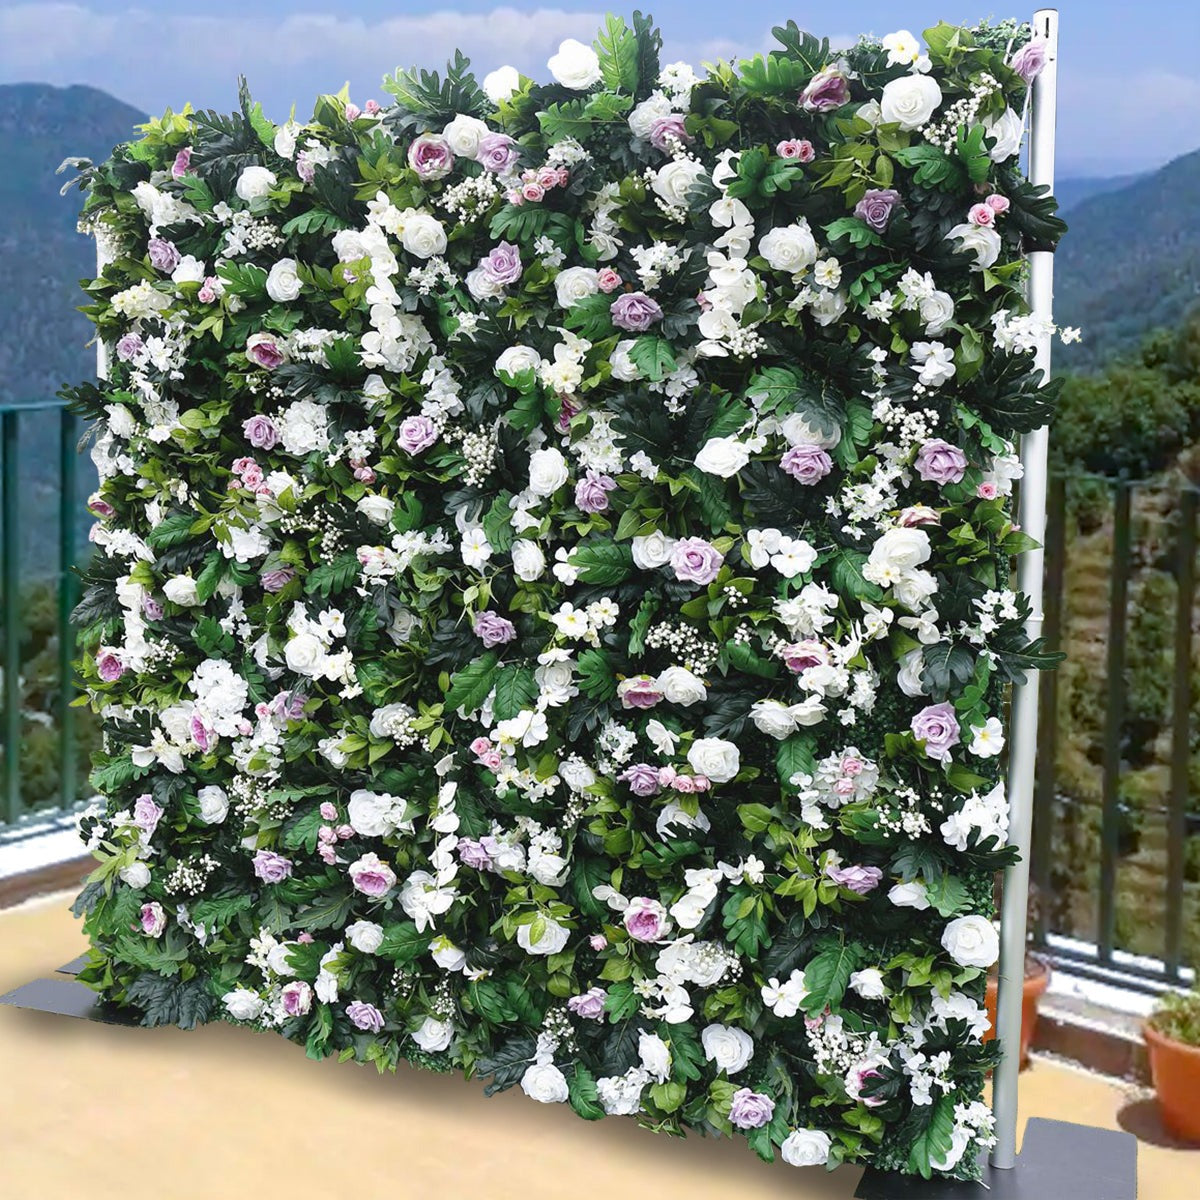 3D Artificial Flower Wall Arrangement Wedding Party Birthday Backdrop Decor HQ9045